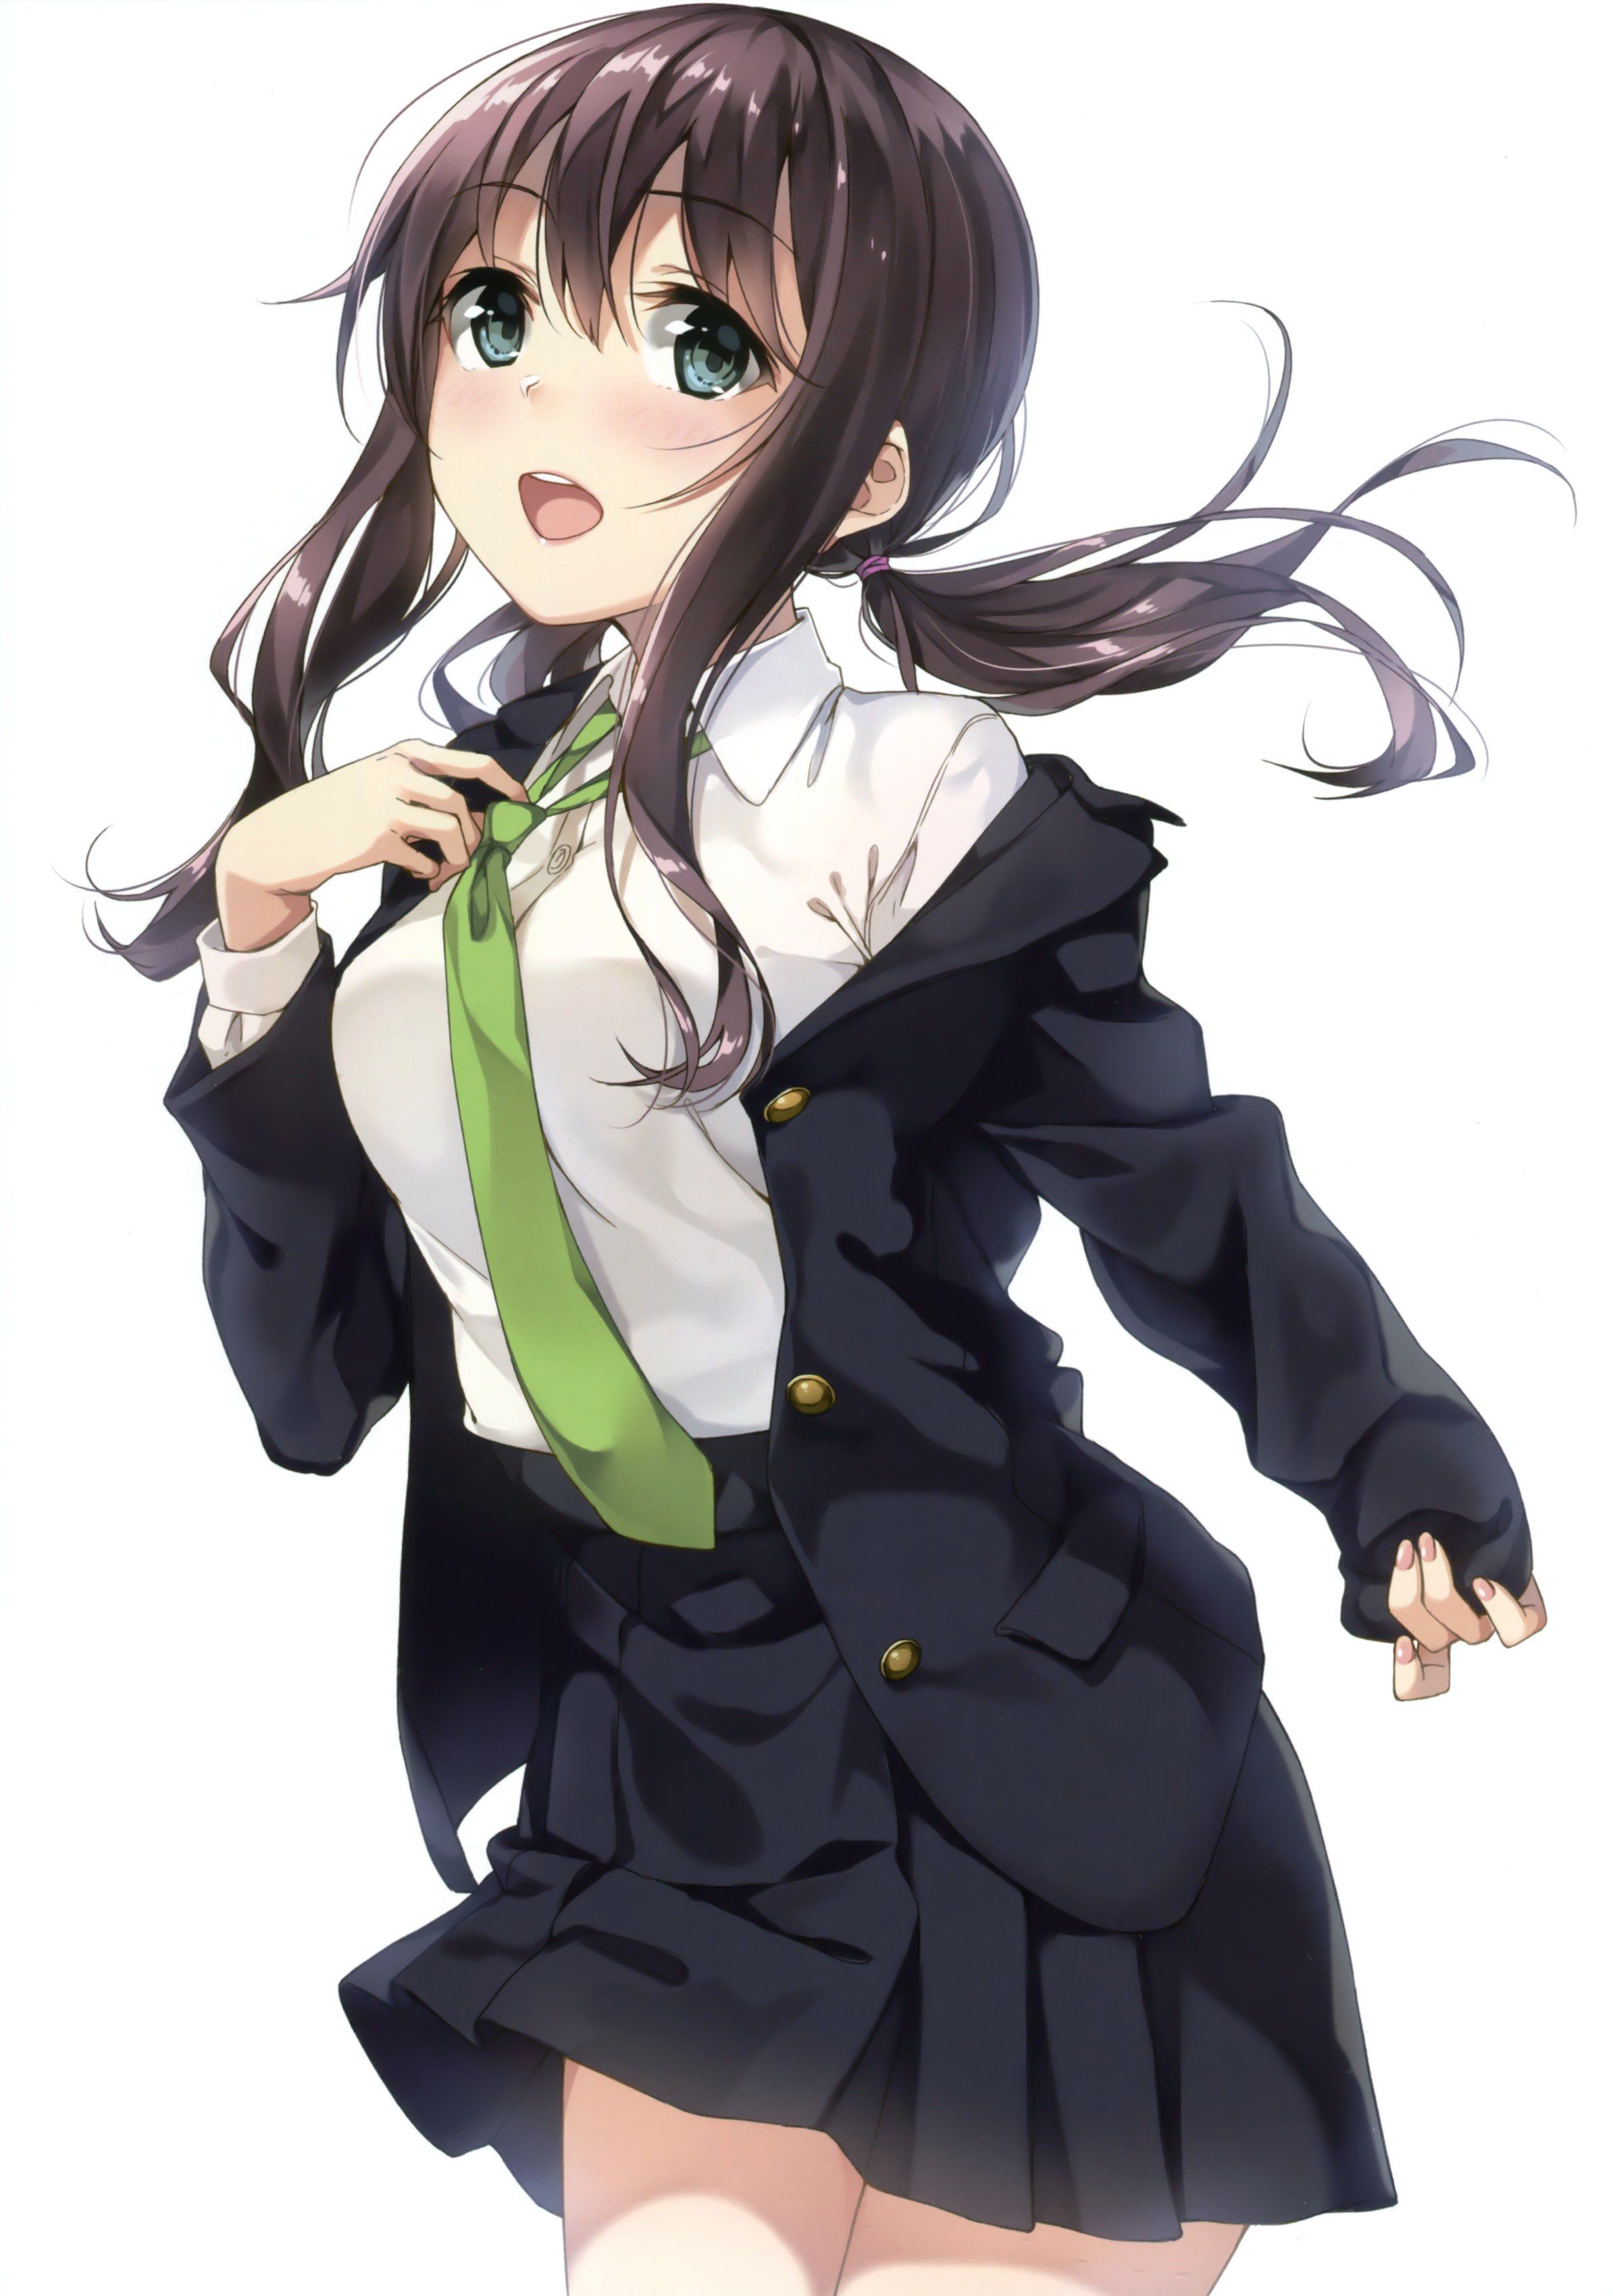 [Secondary] secondary image of a pretty girl wearing a school uniform Part 10 [uniform, non-erotic] 26